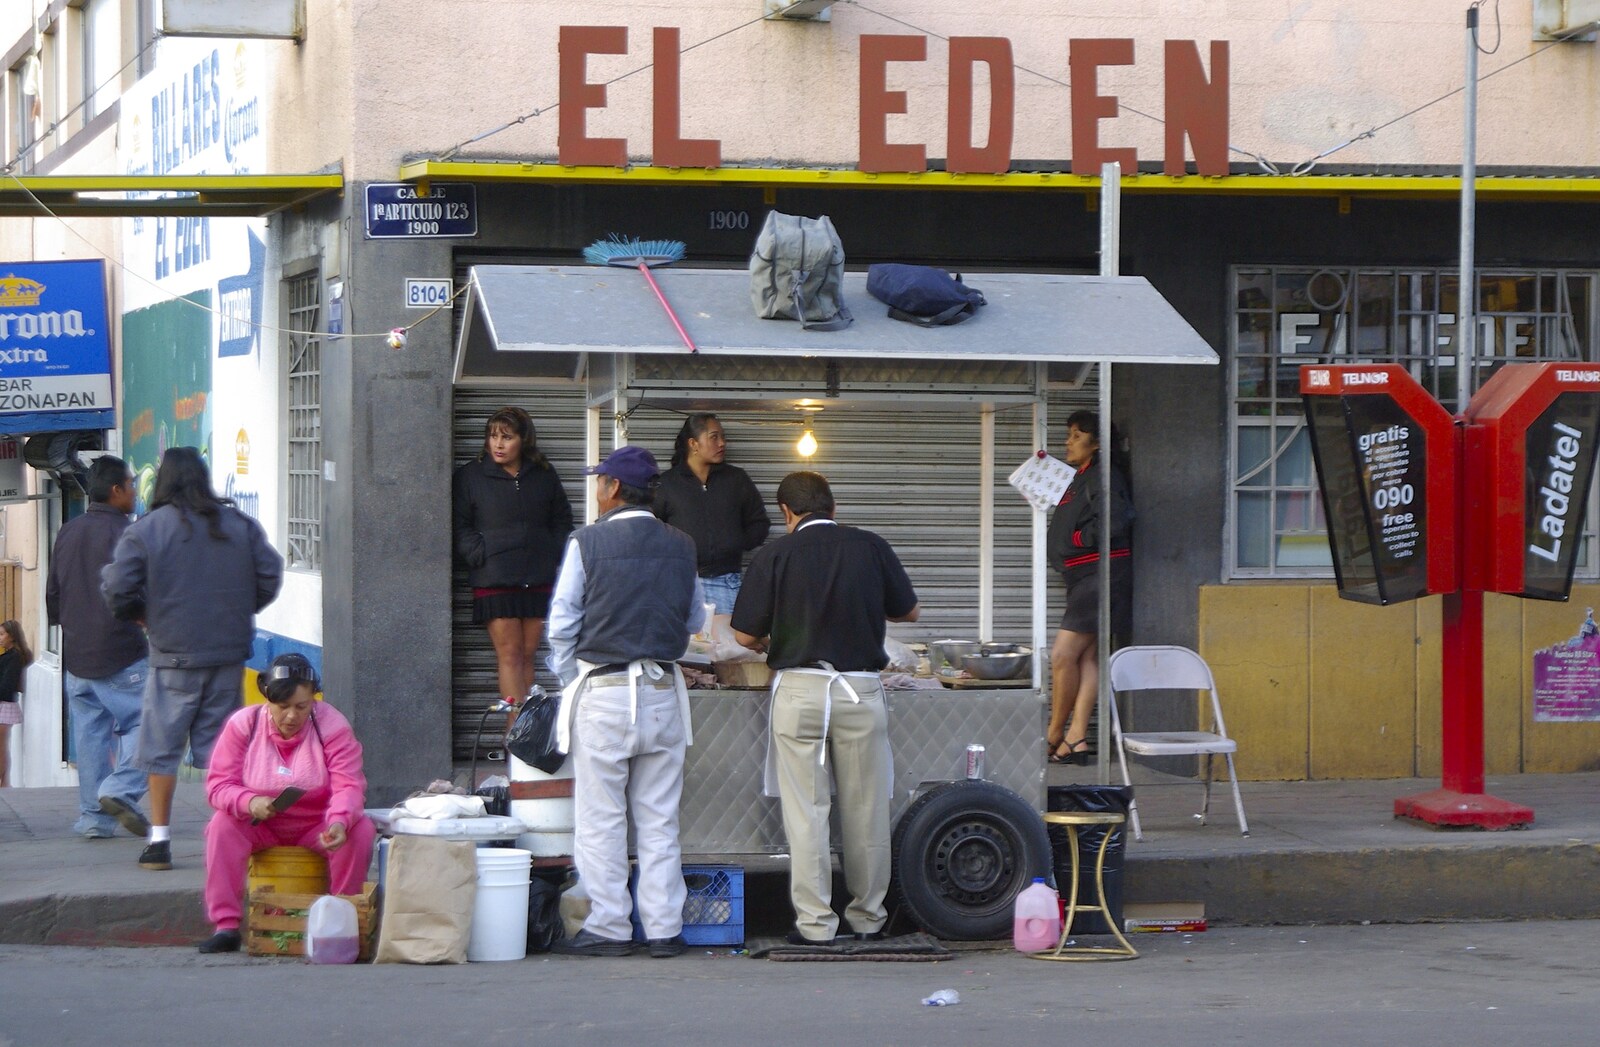 Rosarito and Tijuana, Baja California, Mexico - 2nd March 2008: More street-corner action